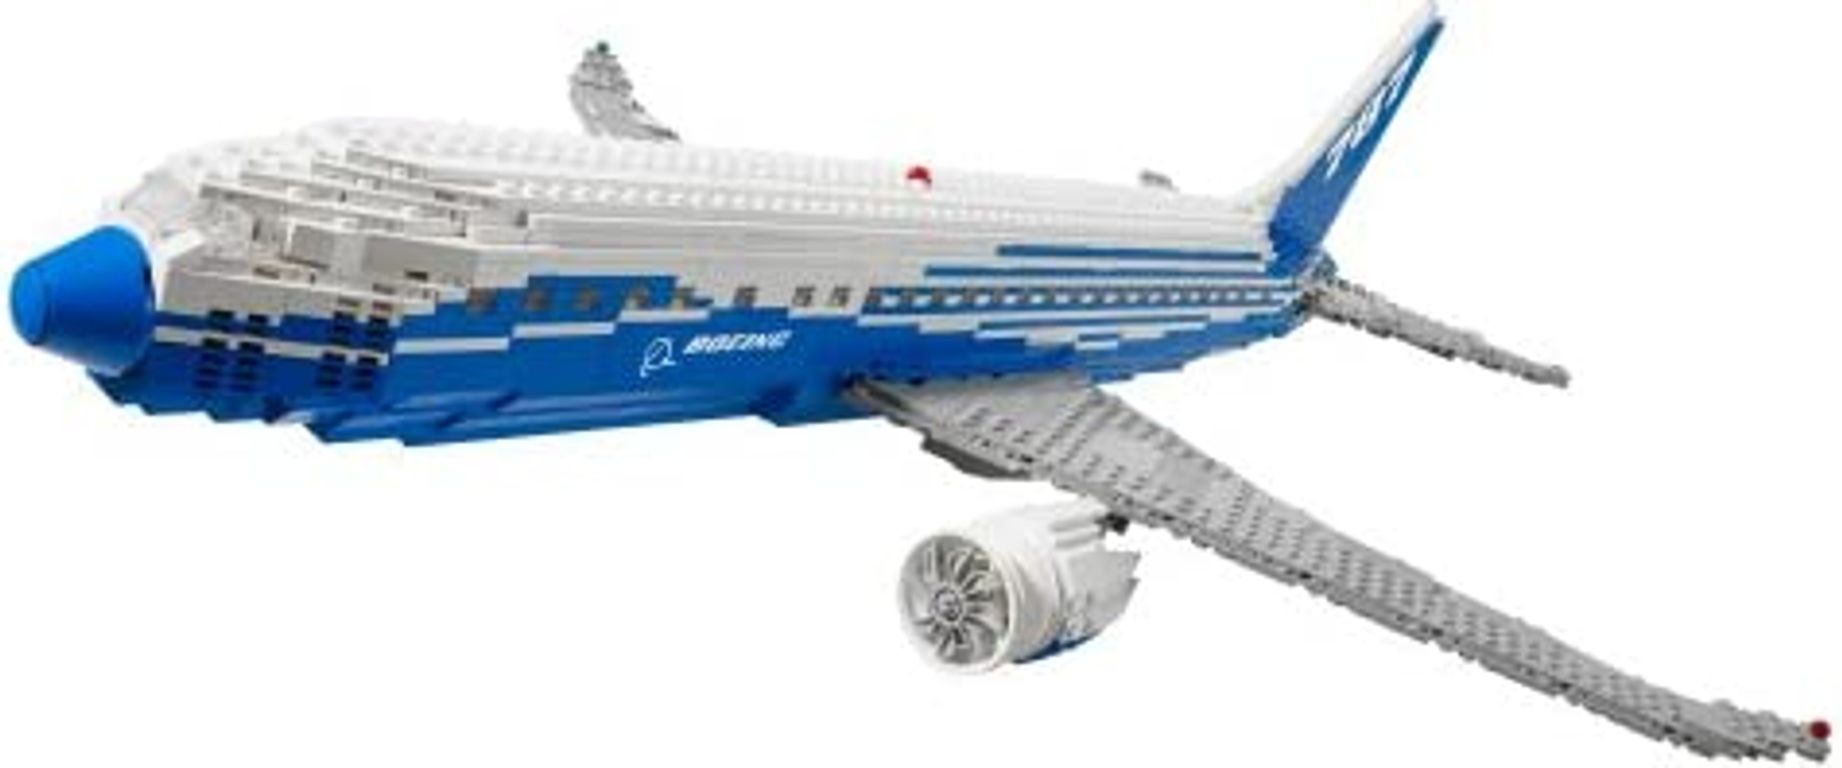 Boeing 787 Dreamliner componenti